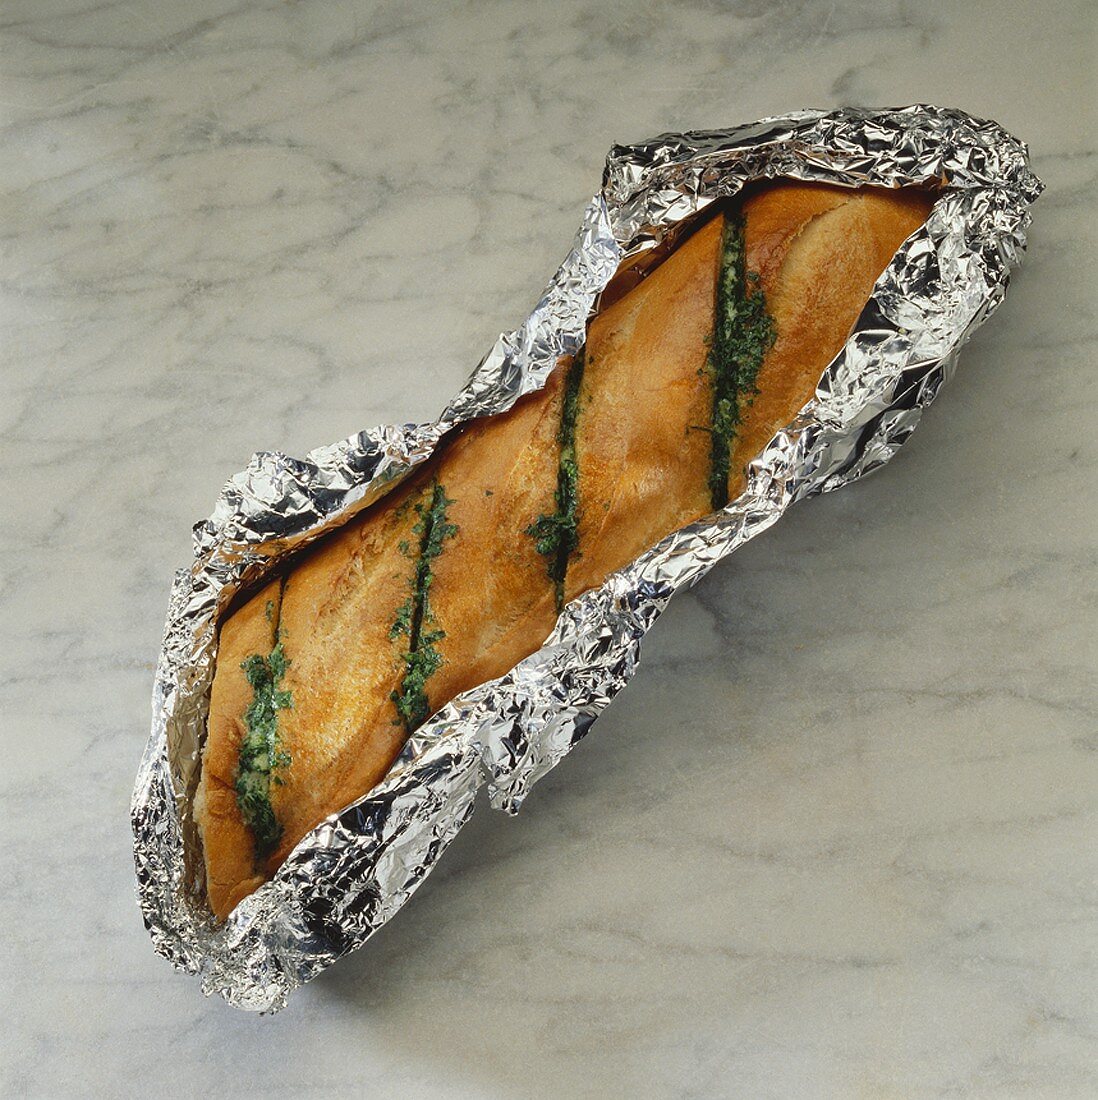 Grilled herb baguette in aluminium foil